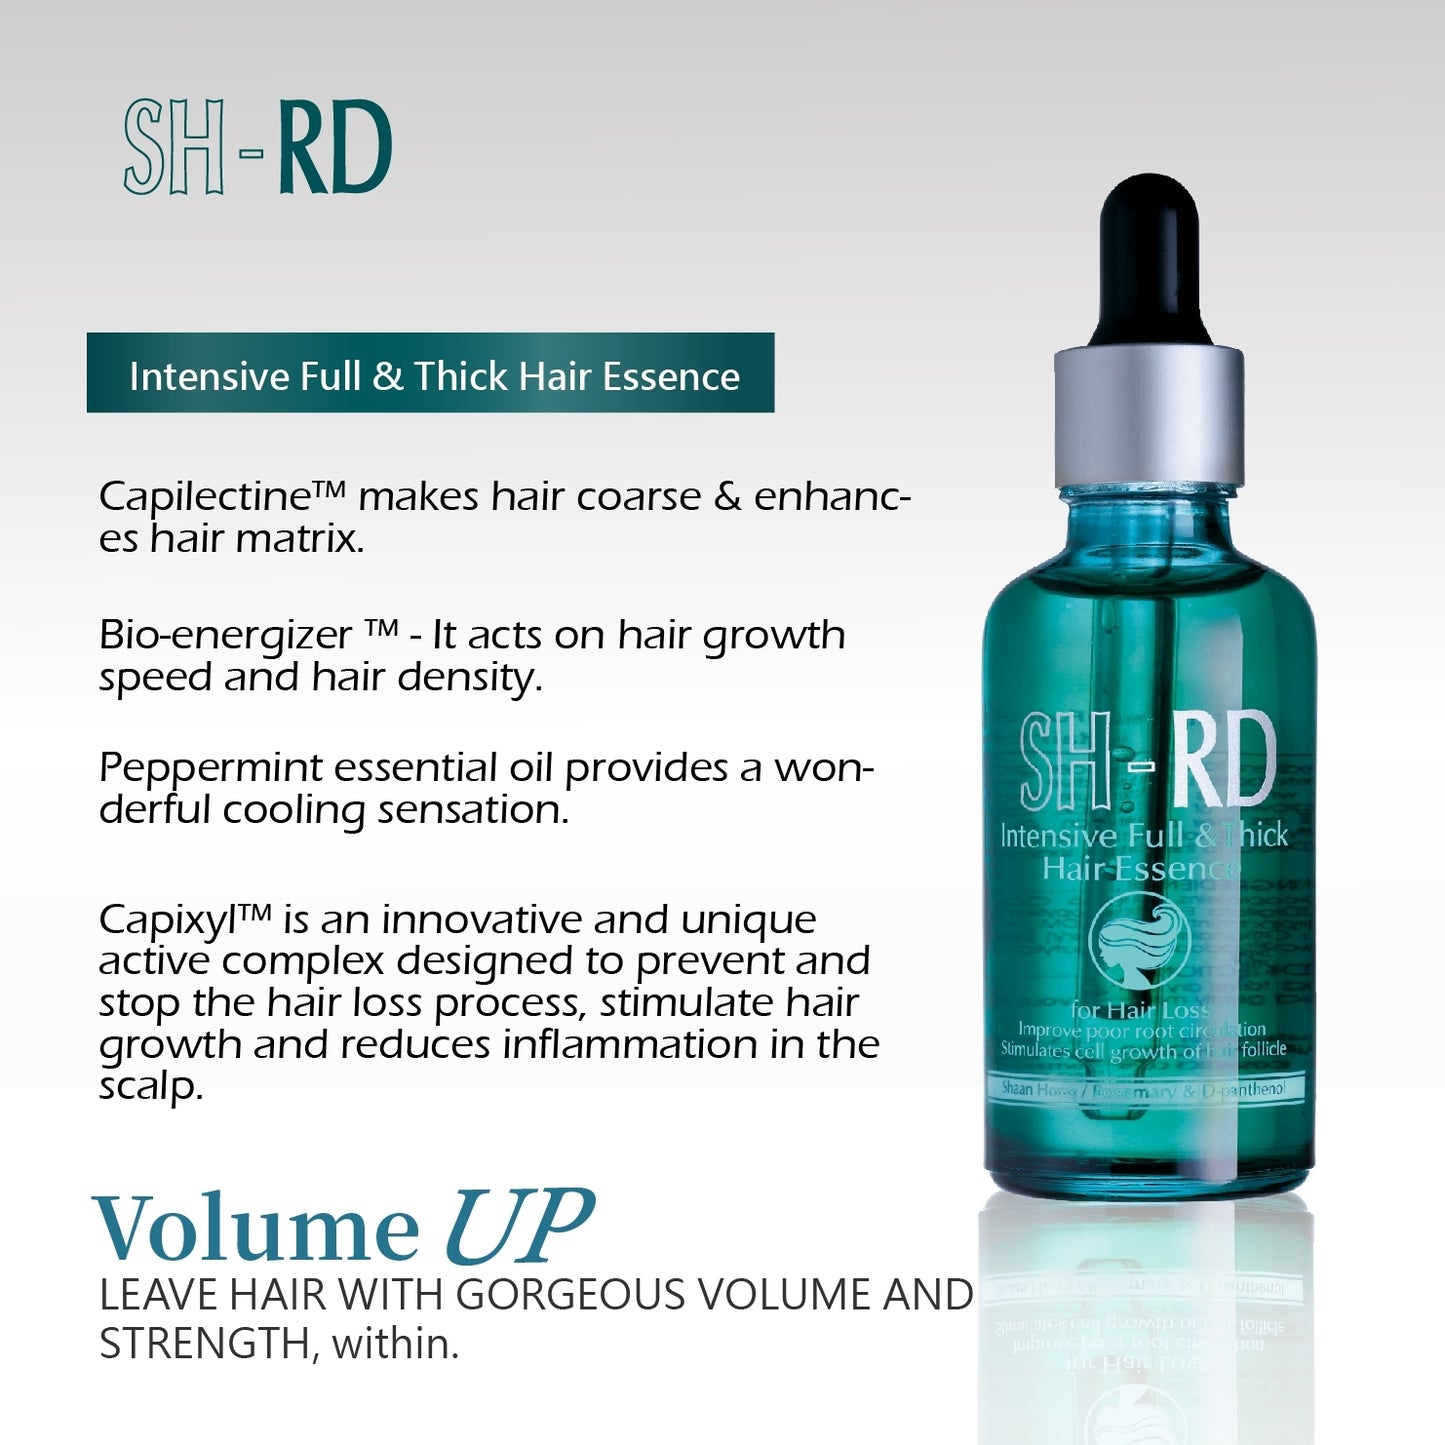 SH-RD Intensive Full & Thick Hair Essence (For Hair Loss)